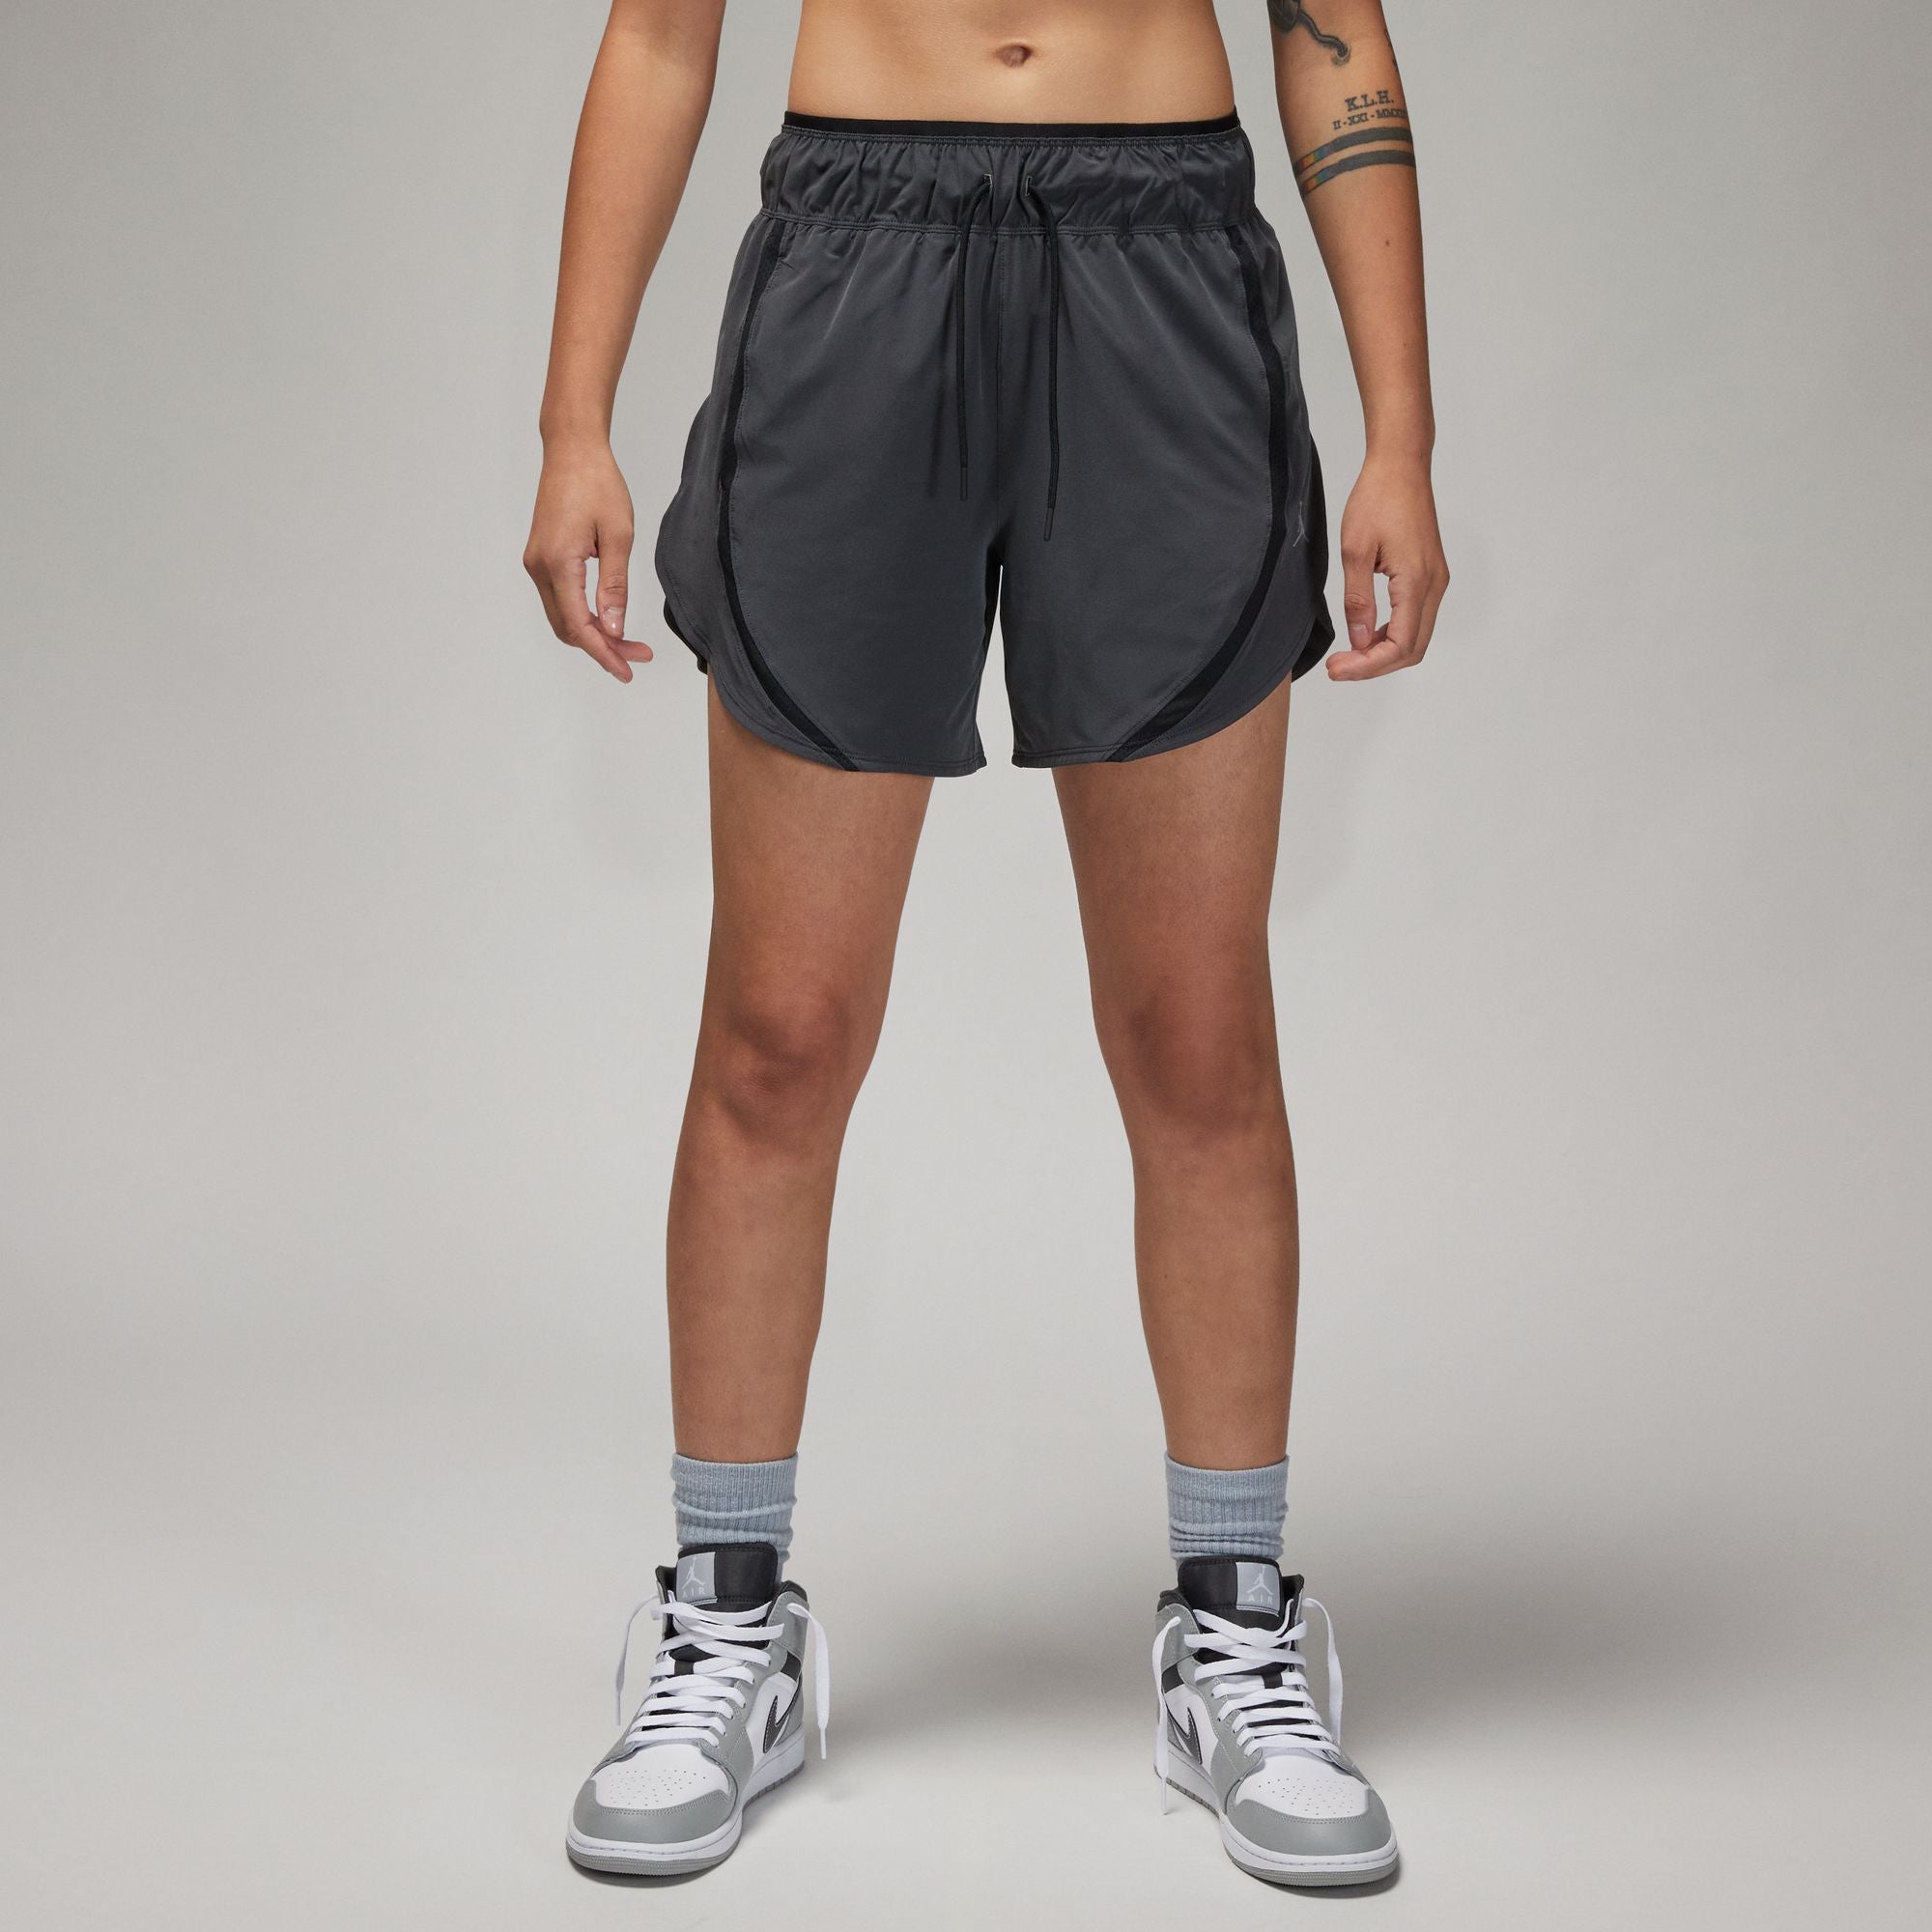 Jordan Sport Shorts - Black/Stealth